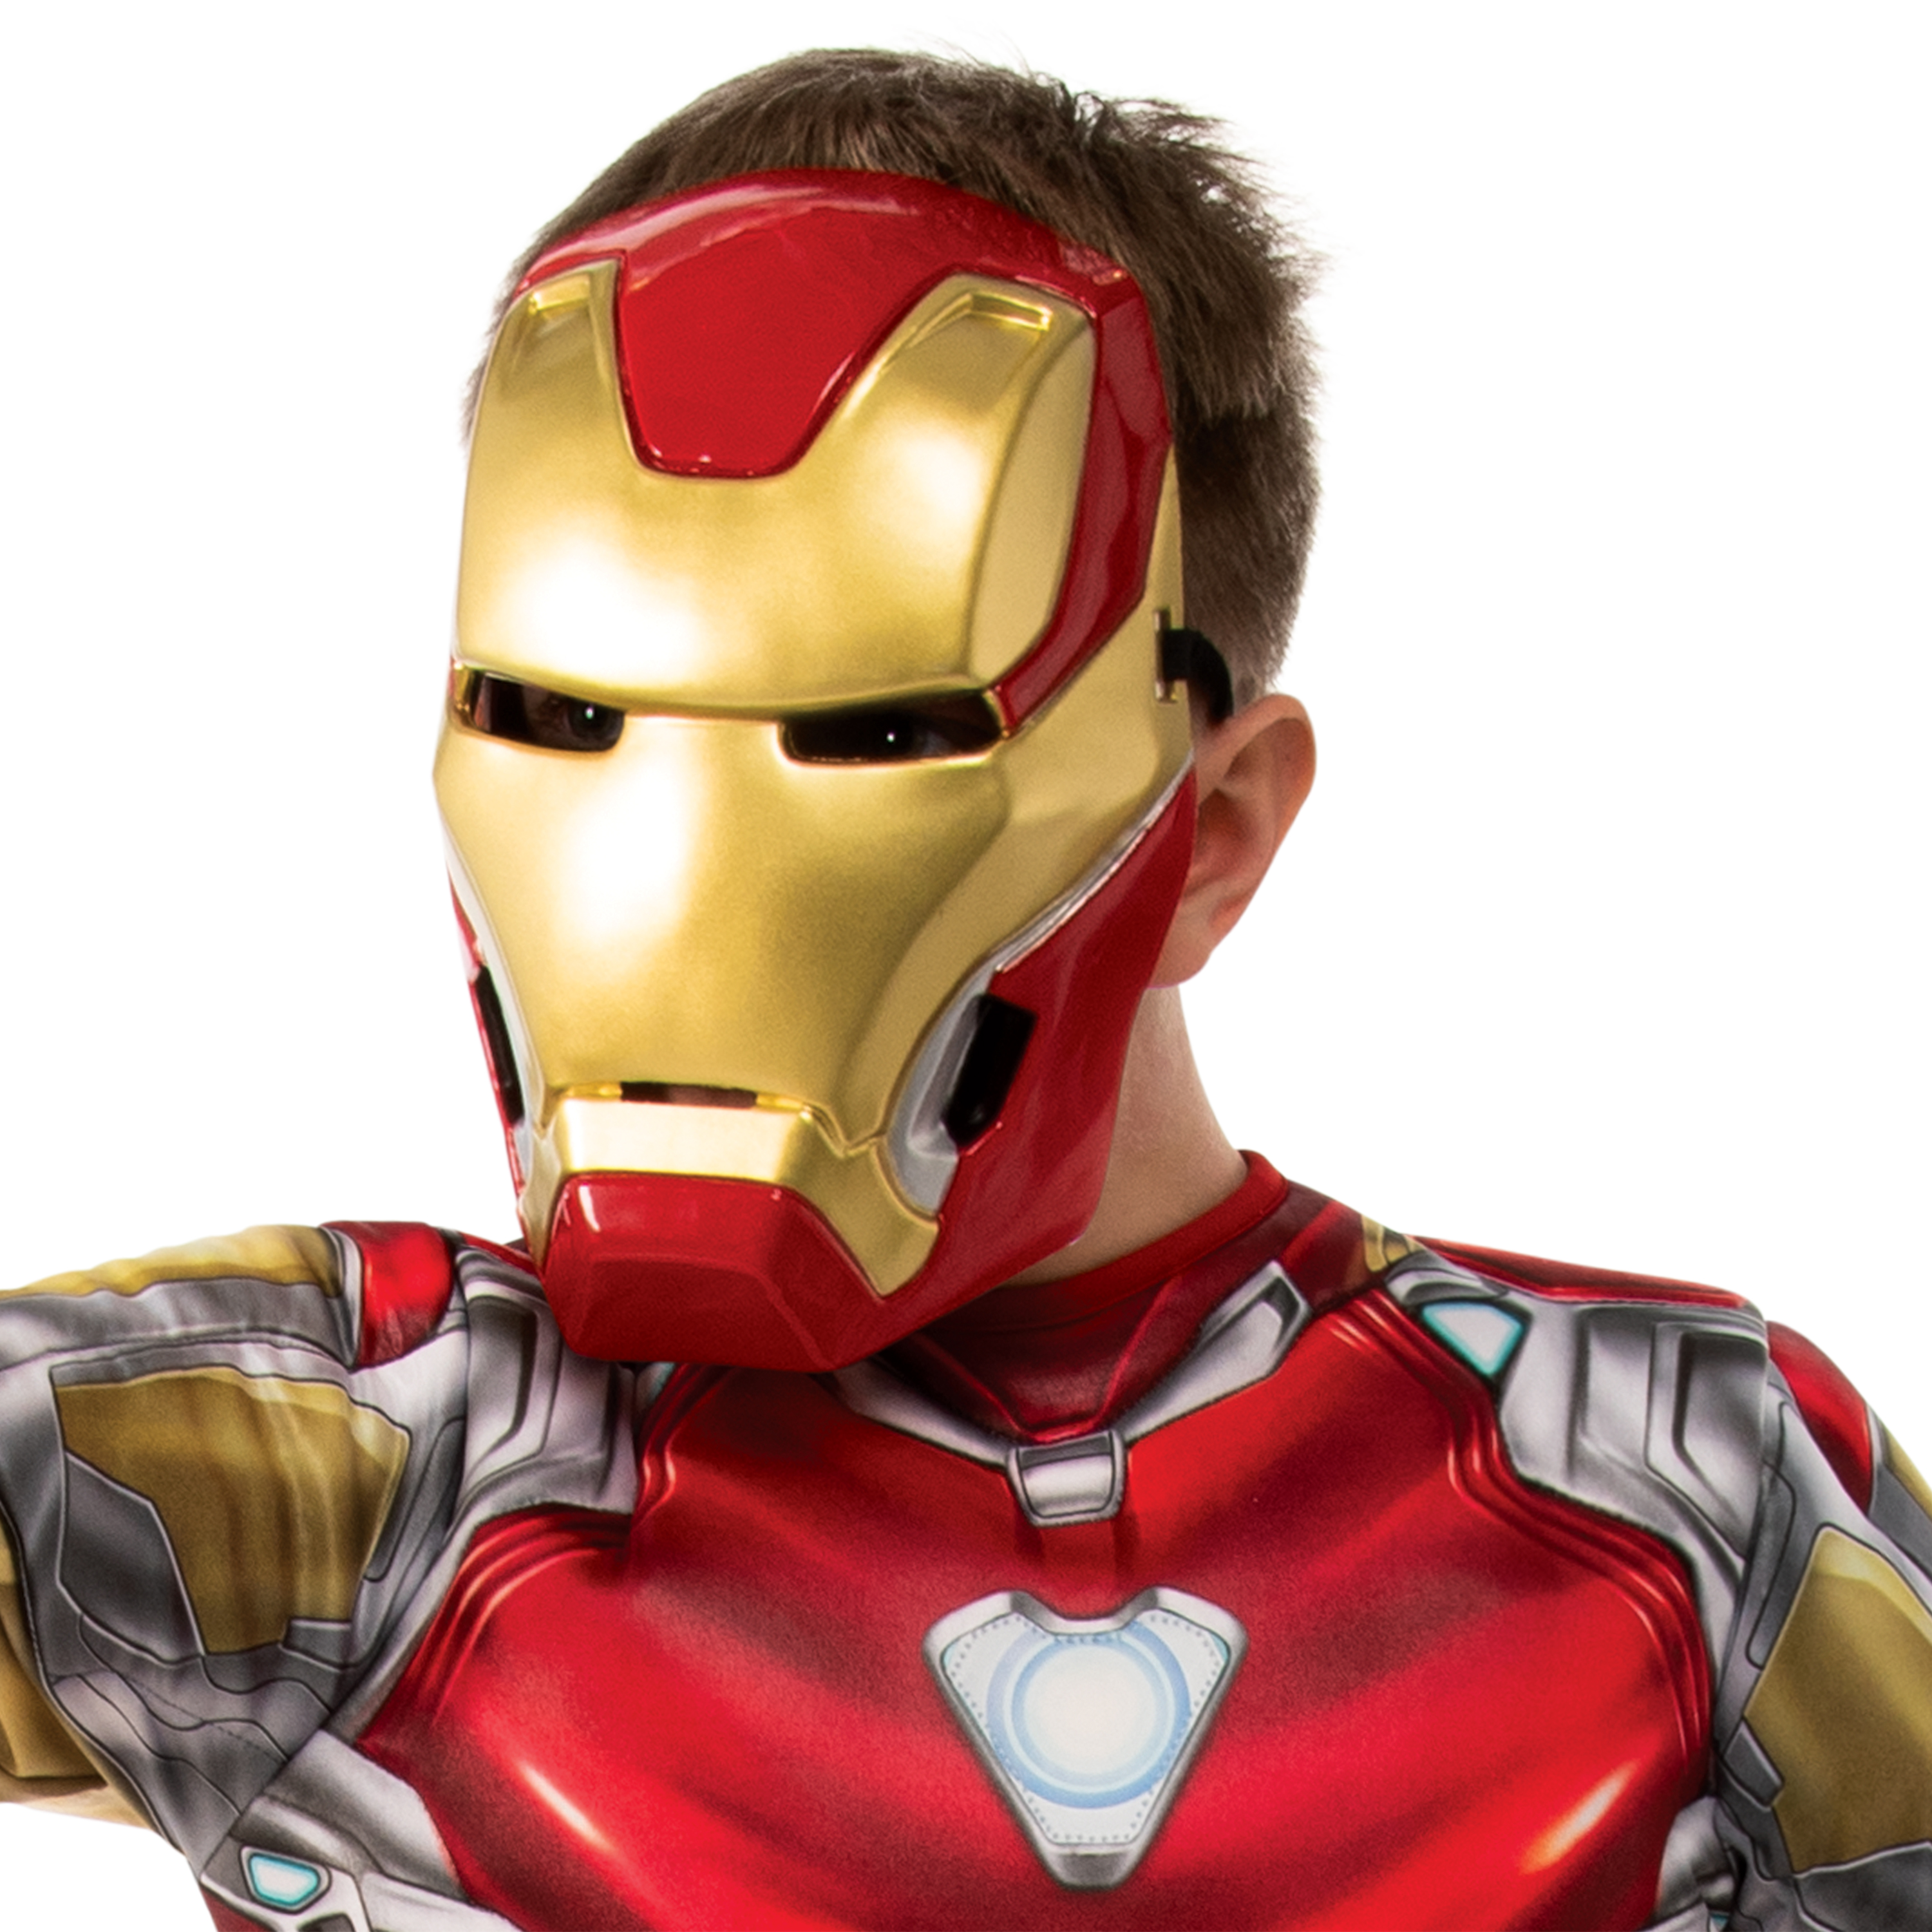 Child Officially Licensed Boys Marvel Iron Man Halloween Costume Medium, Red - image 2 of 6